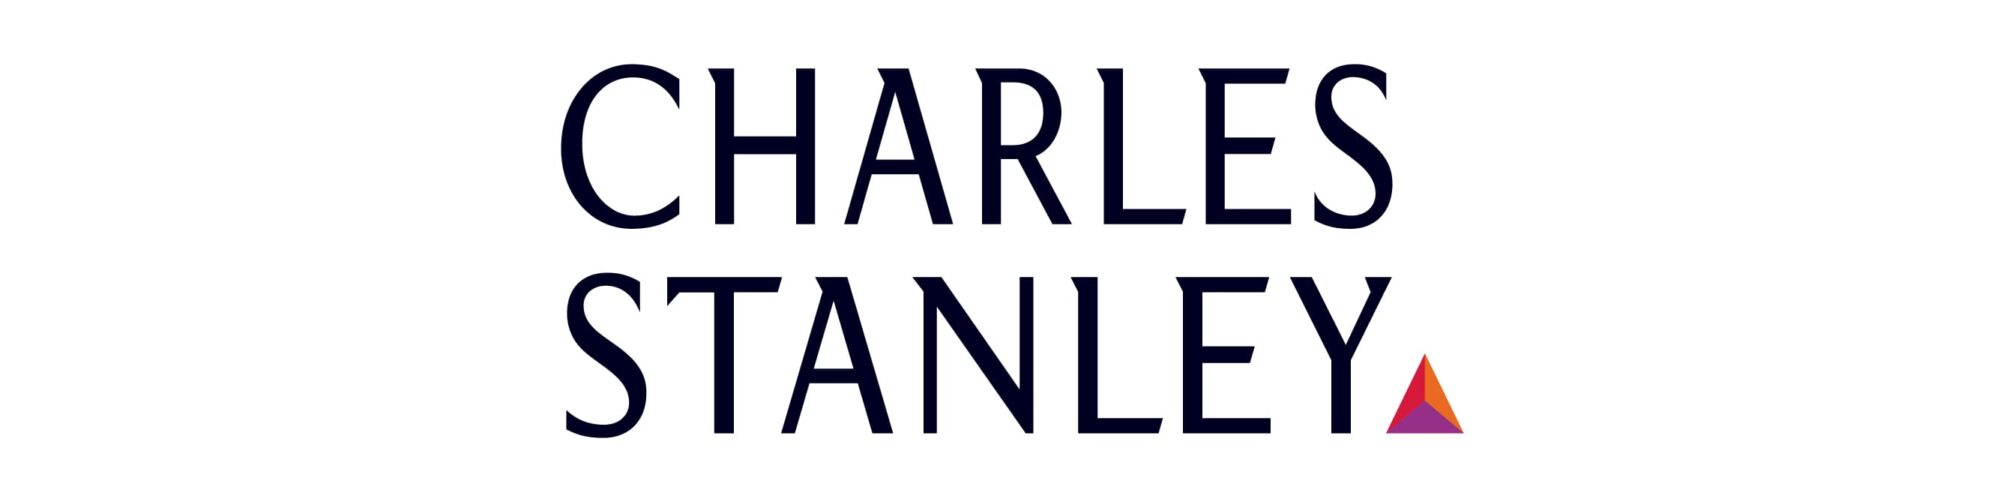 charles stanley